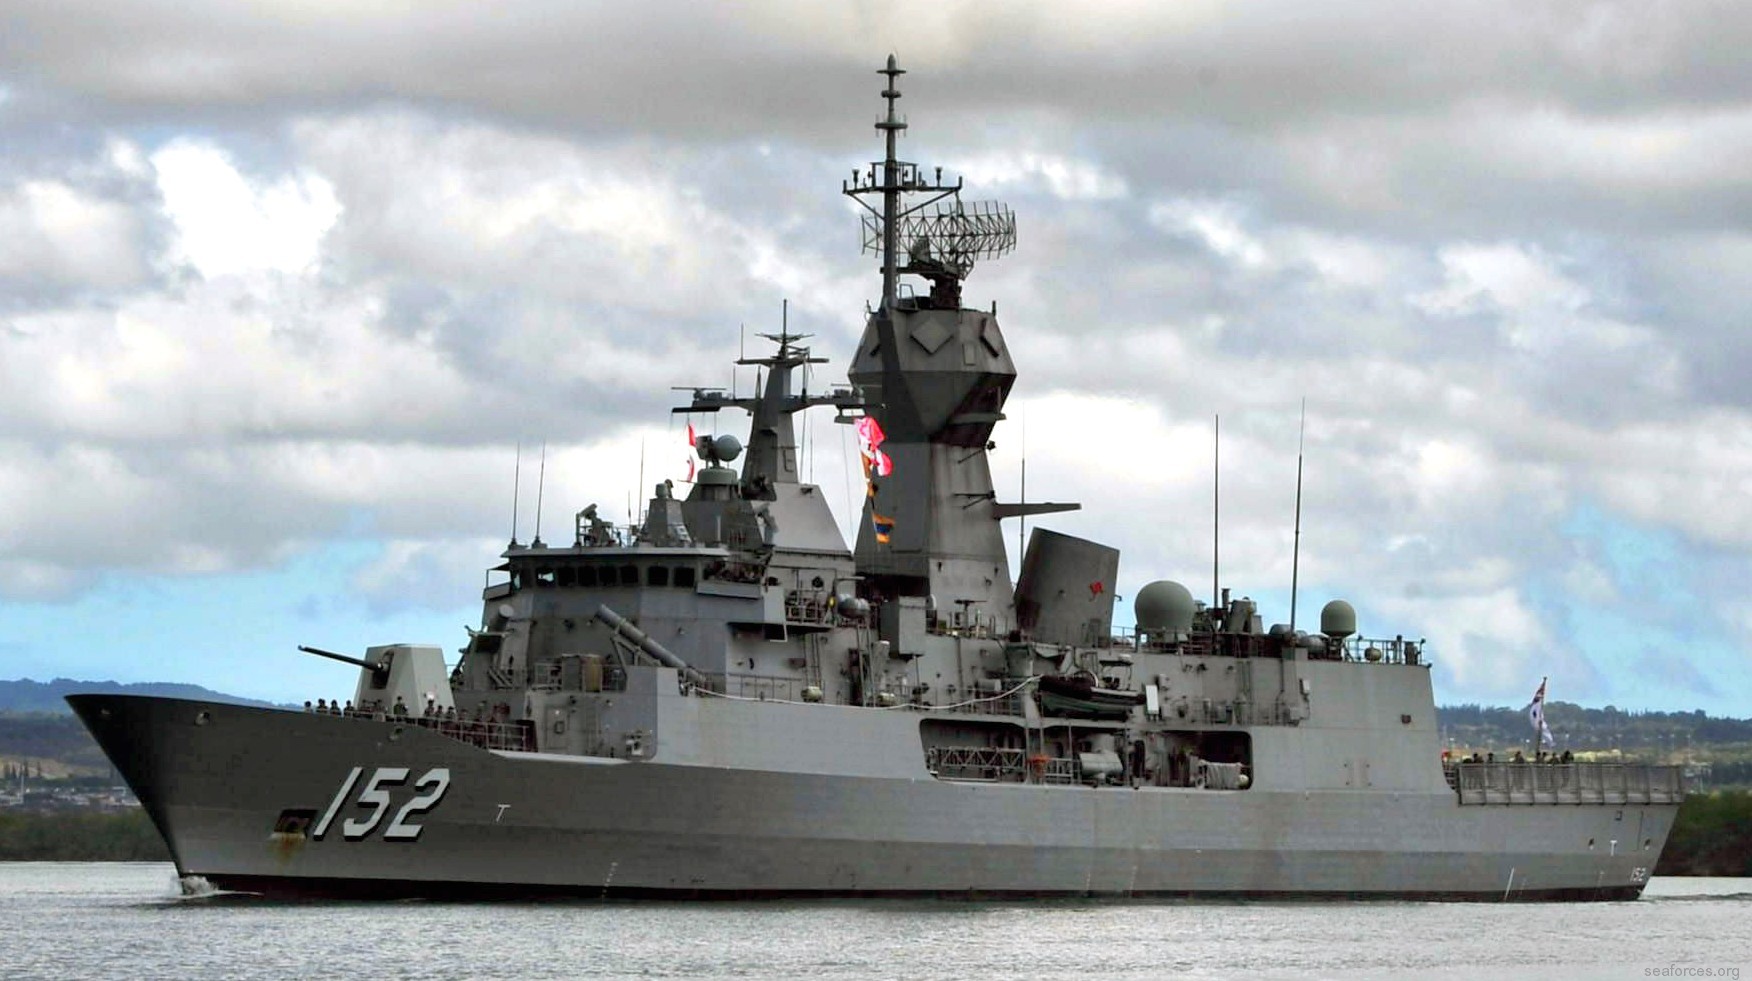 ffh-152 hmas warramunga anzac class frigate royal australian navy 2016 25 pearl harbor hawaii